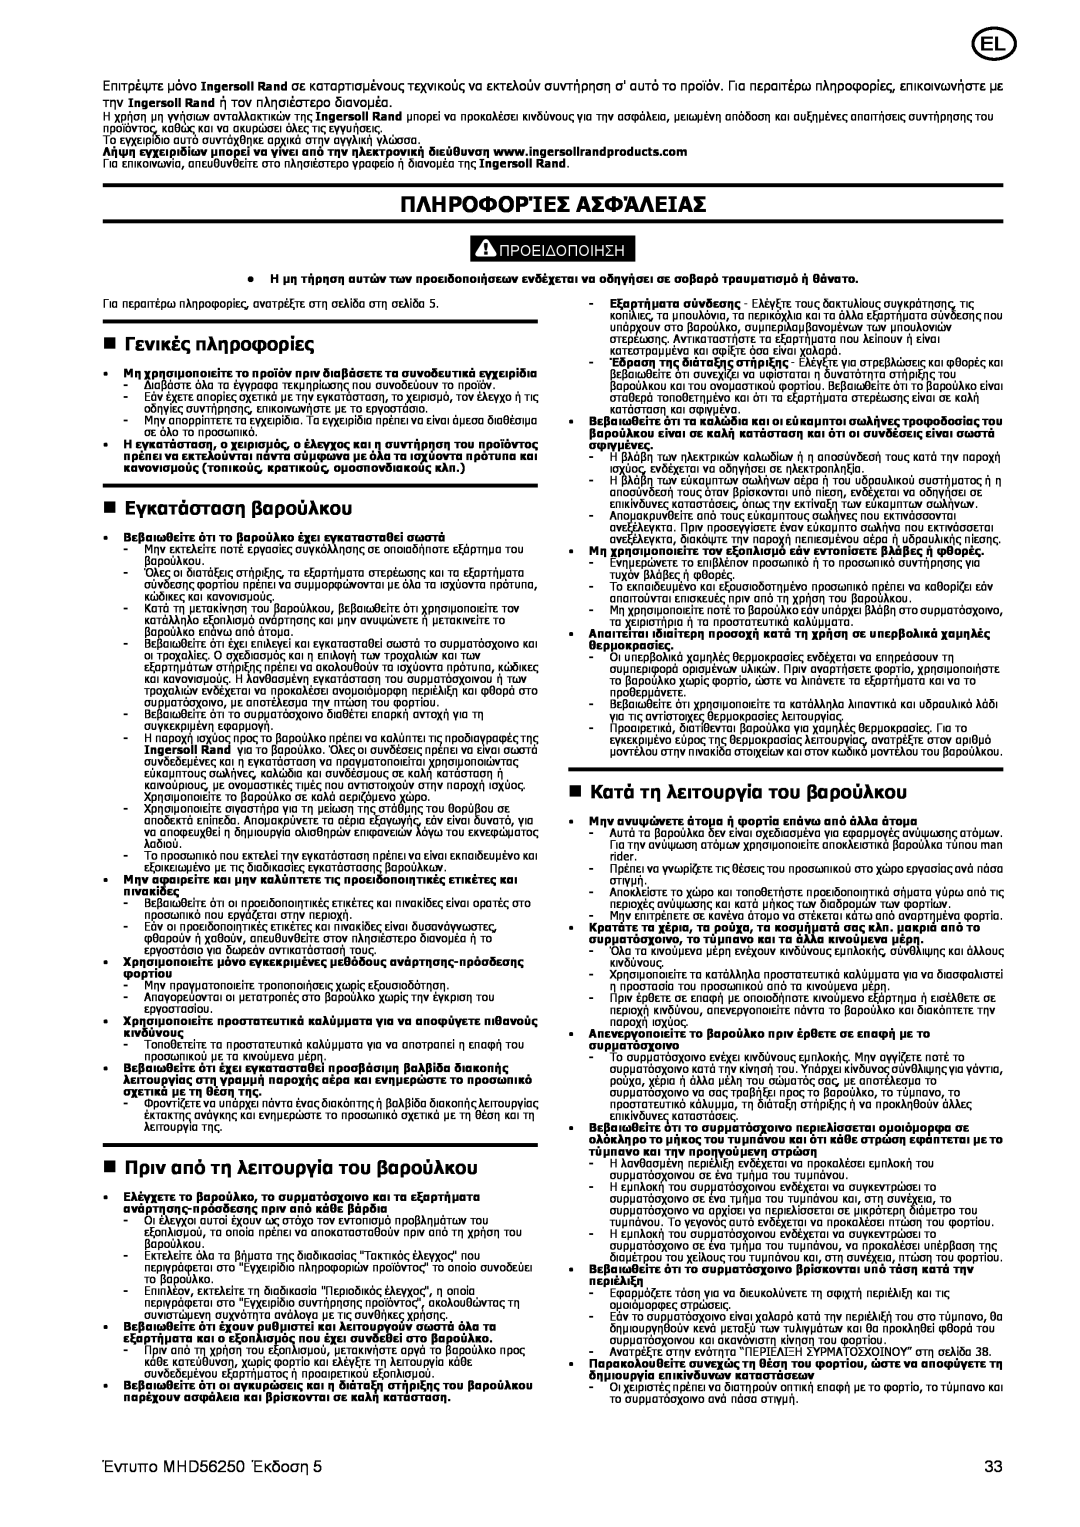 Ingersoll-Rand manual Πληροφορίεσ Ασφάλειασ, n Γενικές πληροφορίες, n Εγκατάσταση βαρούλκου, Έντυπο MHD56250 Έκδοση 